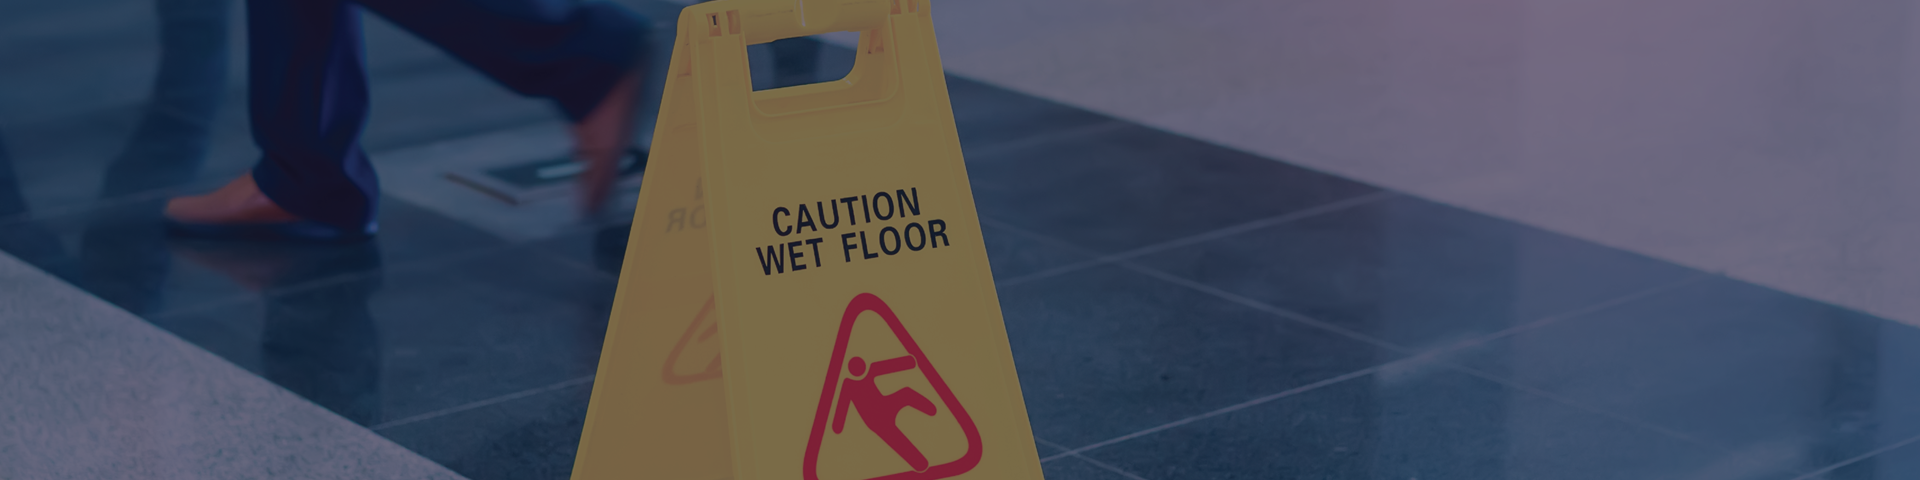 Yellow caution wet floor sign in public area